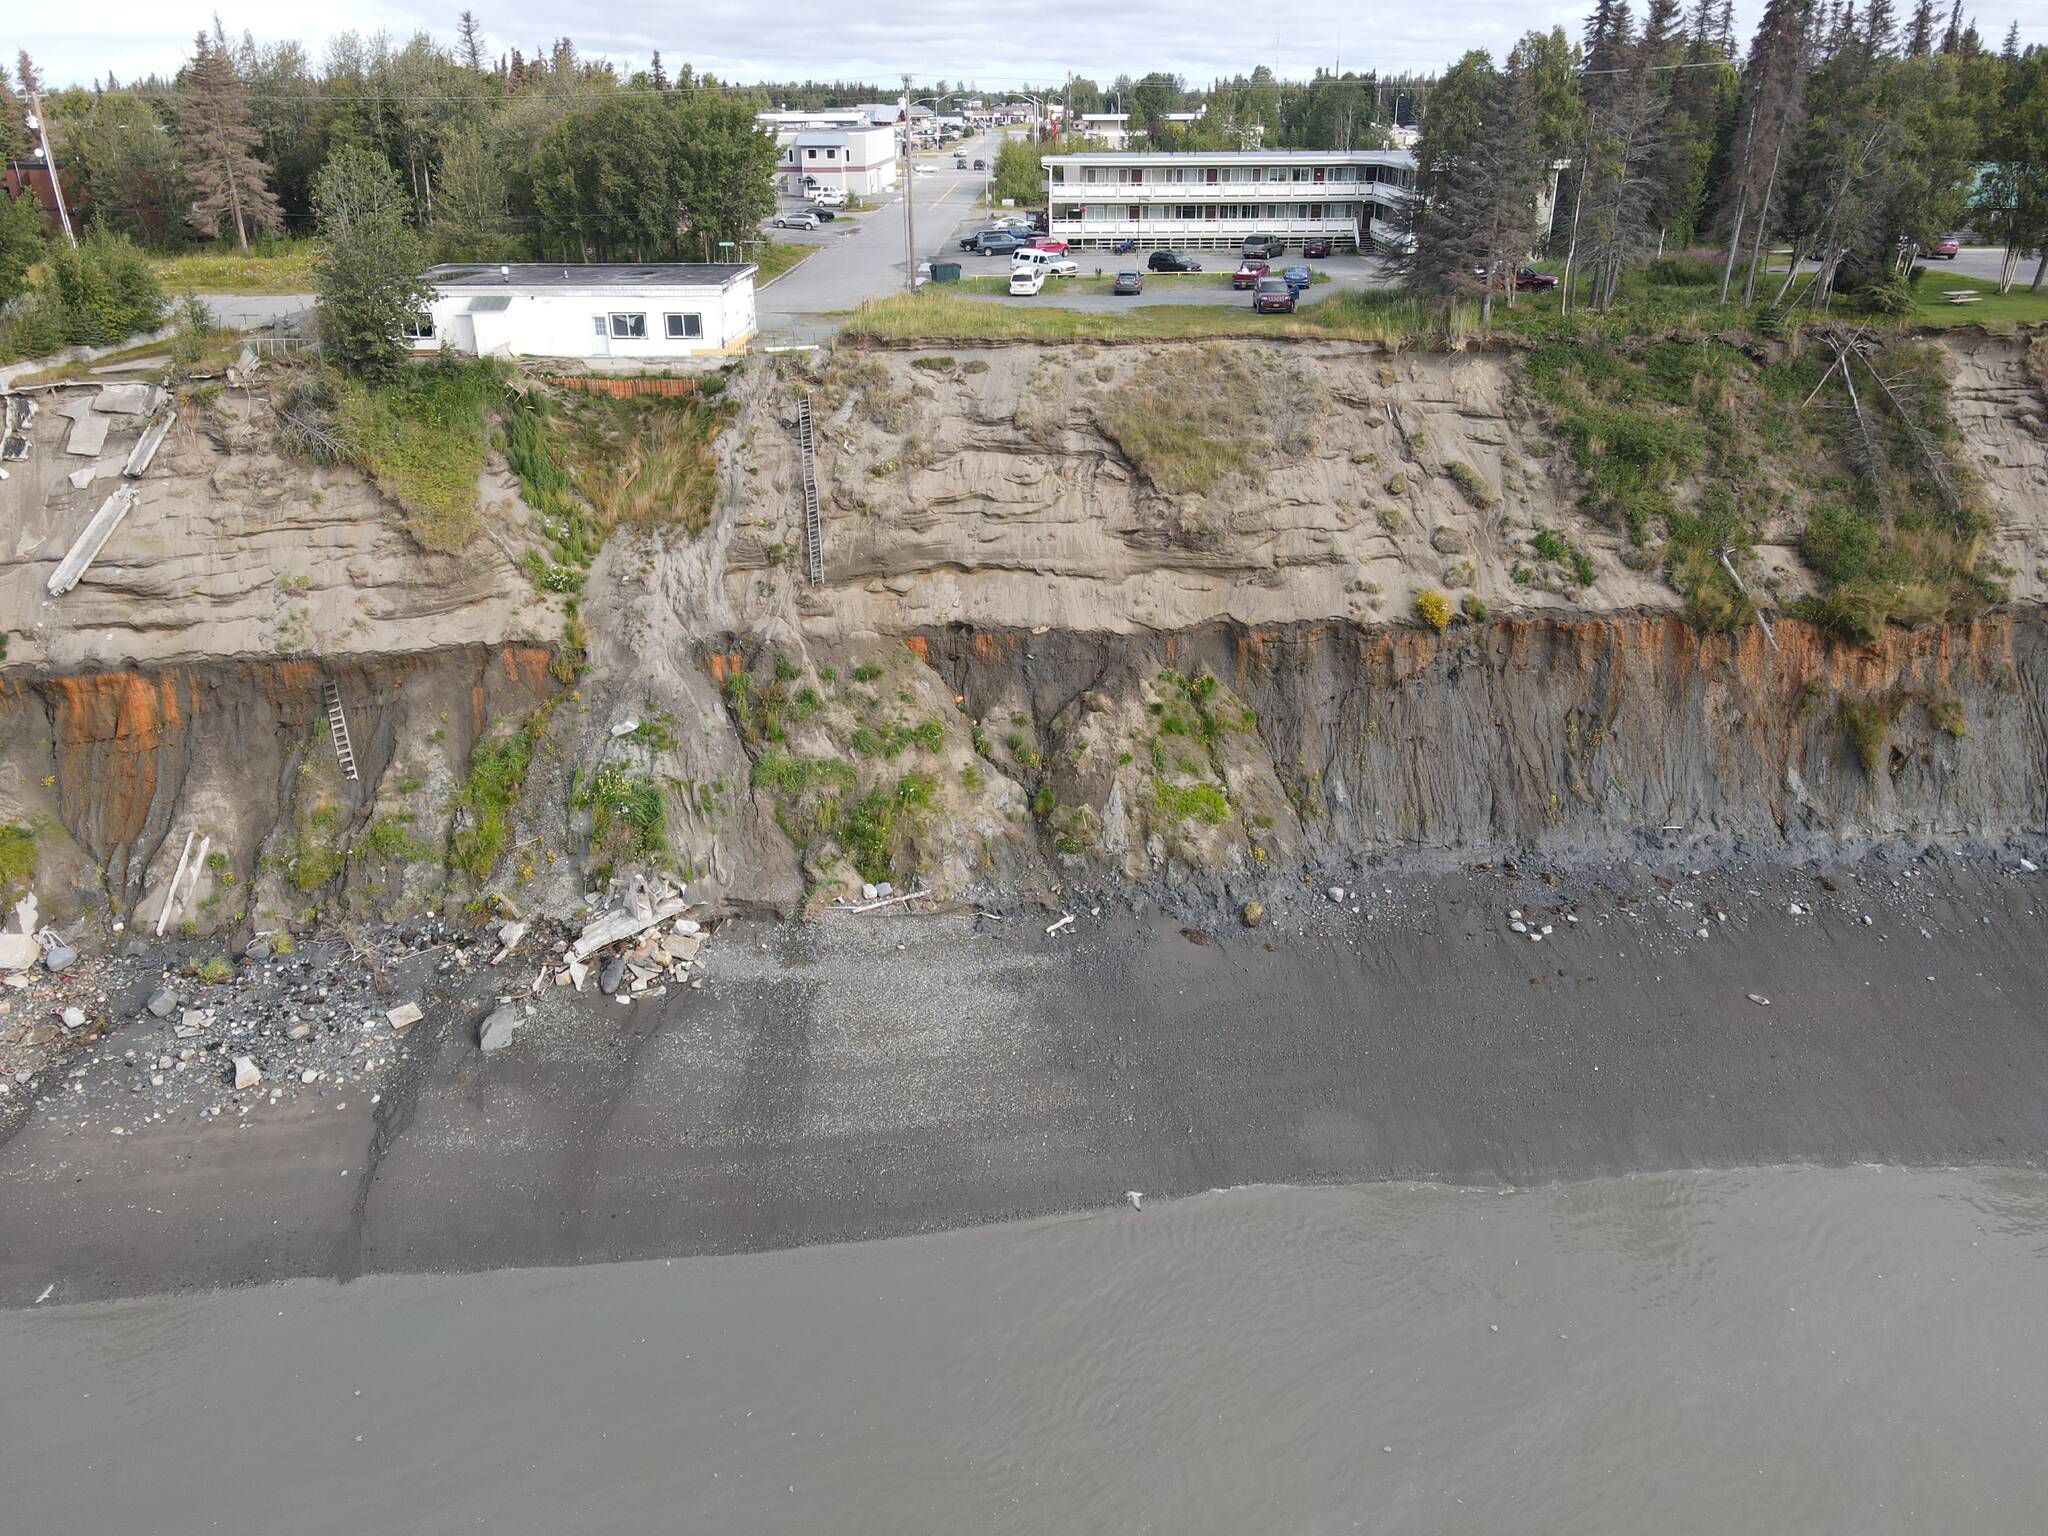 Erosion of the Kenai bluff. (Photo by Aidan Curtin courtesy Scott Curtin)